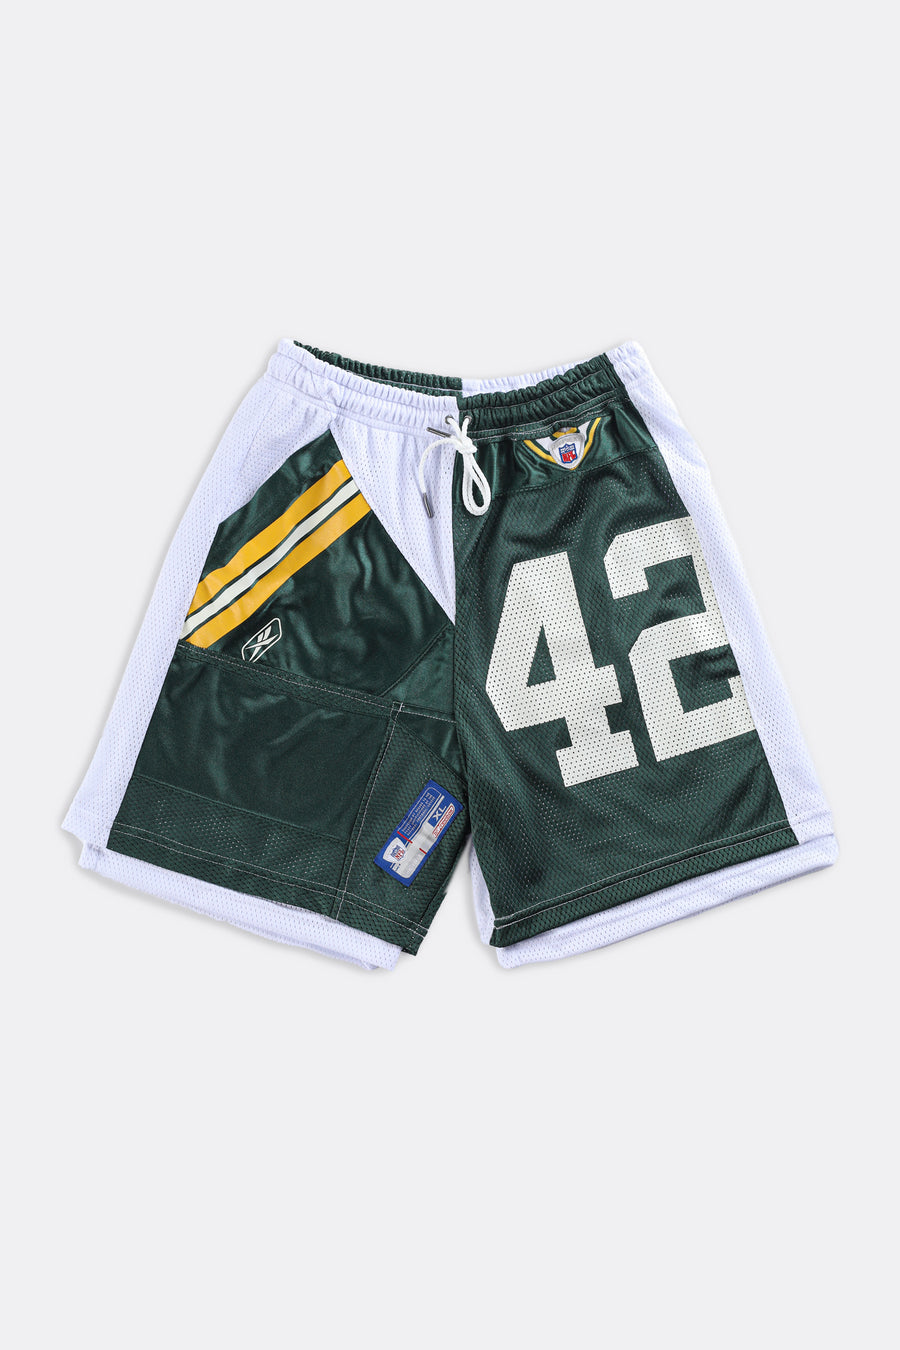 Unisex Rework Packers NFL Jersey Shorts - Women-M, Men-S